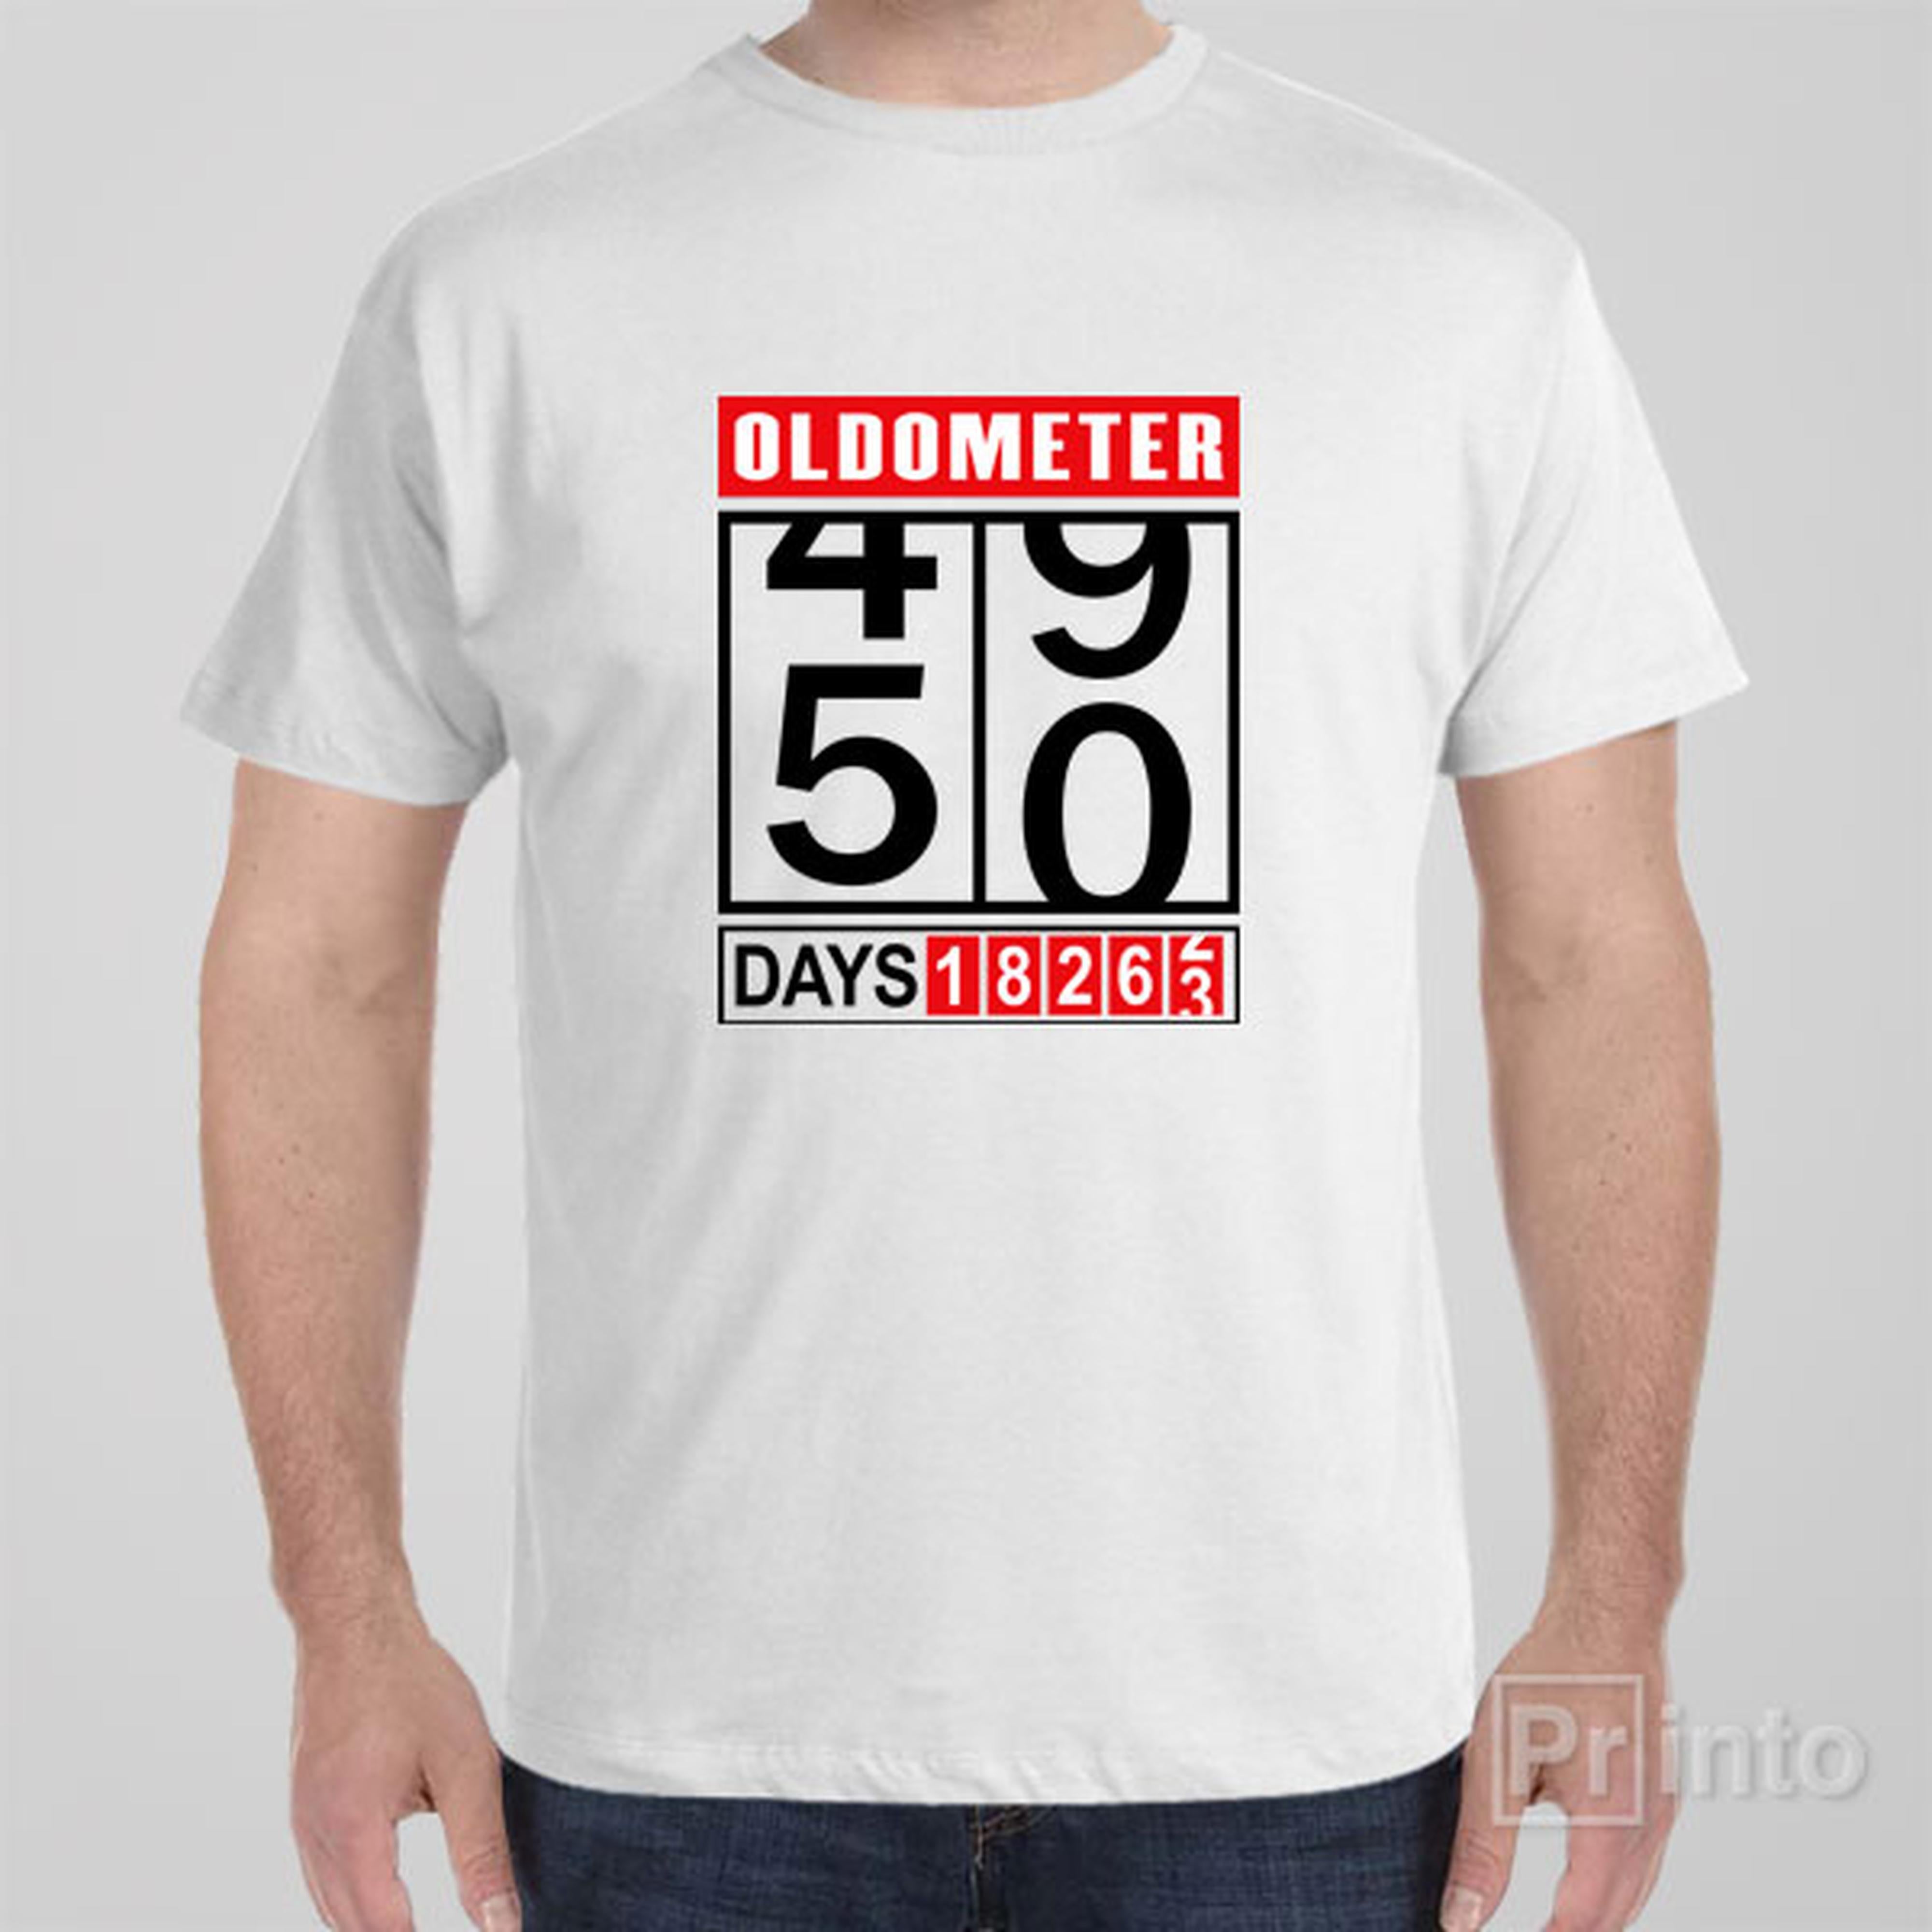 oldometer-50th-birthday-t-shirt